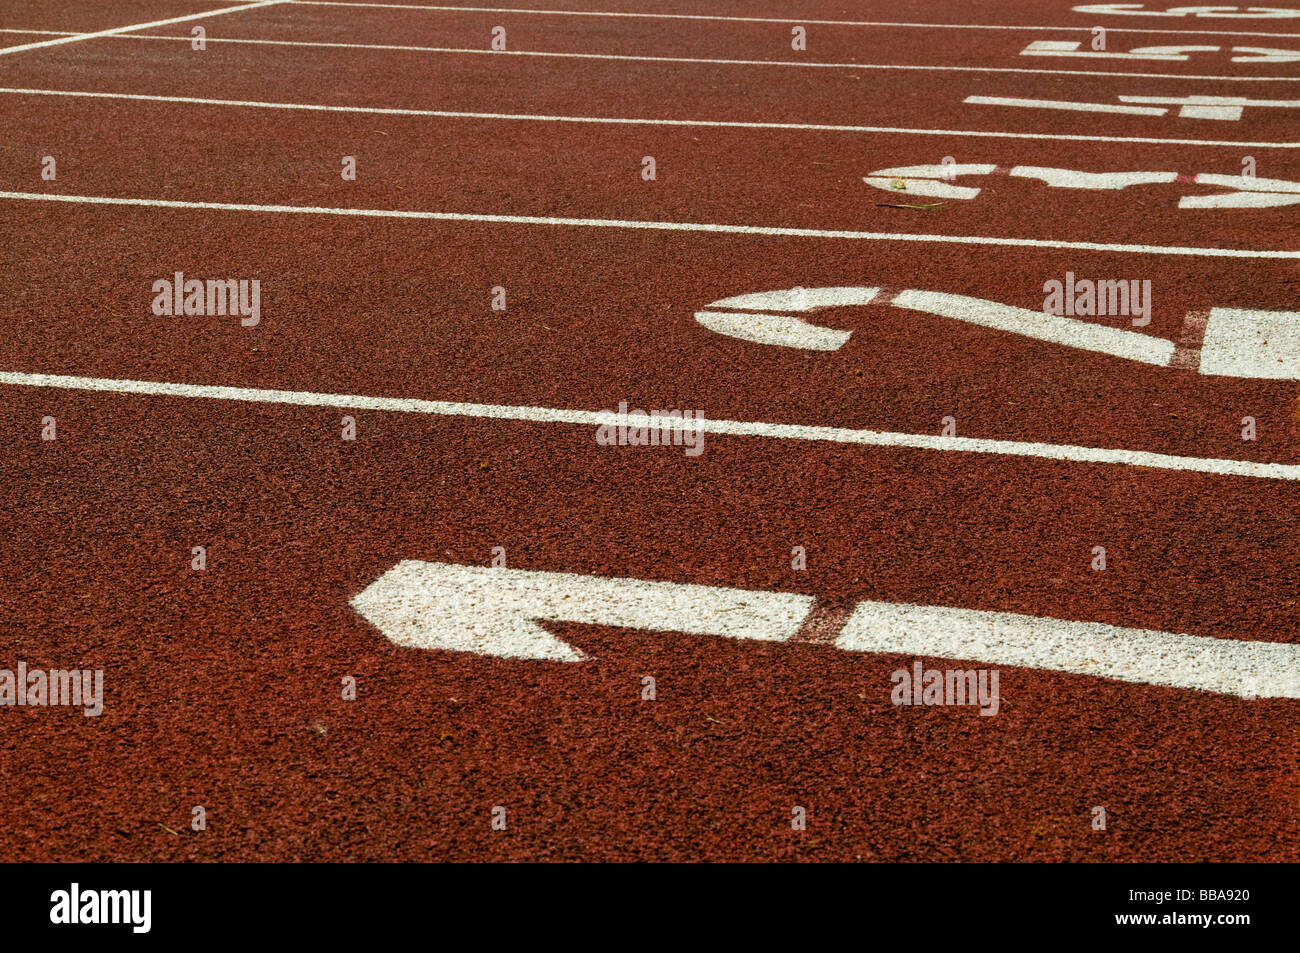 Running tracks in a stadium Stock Photo